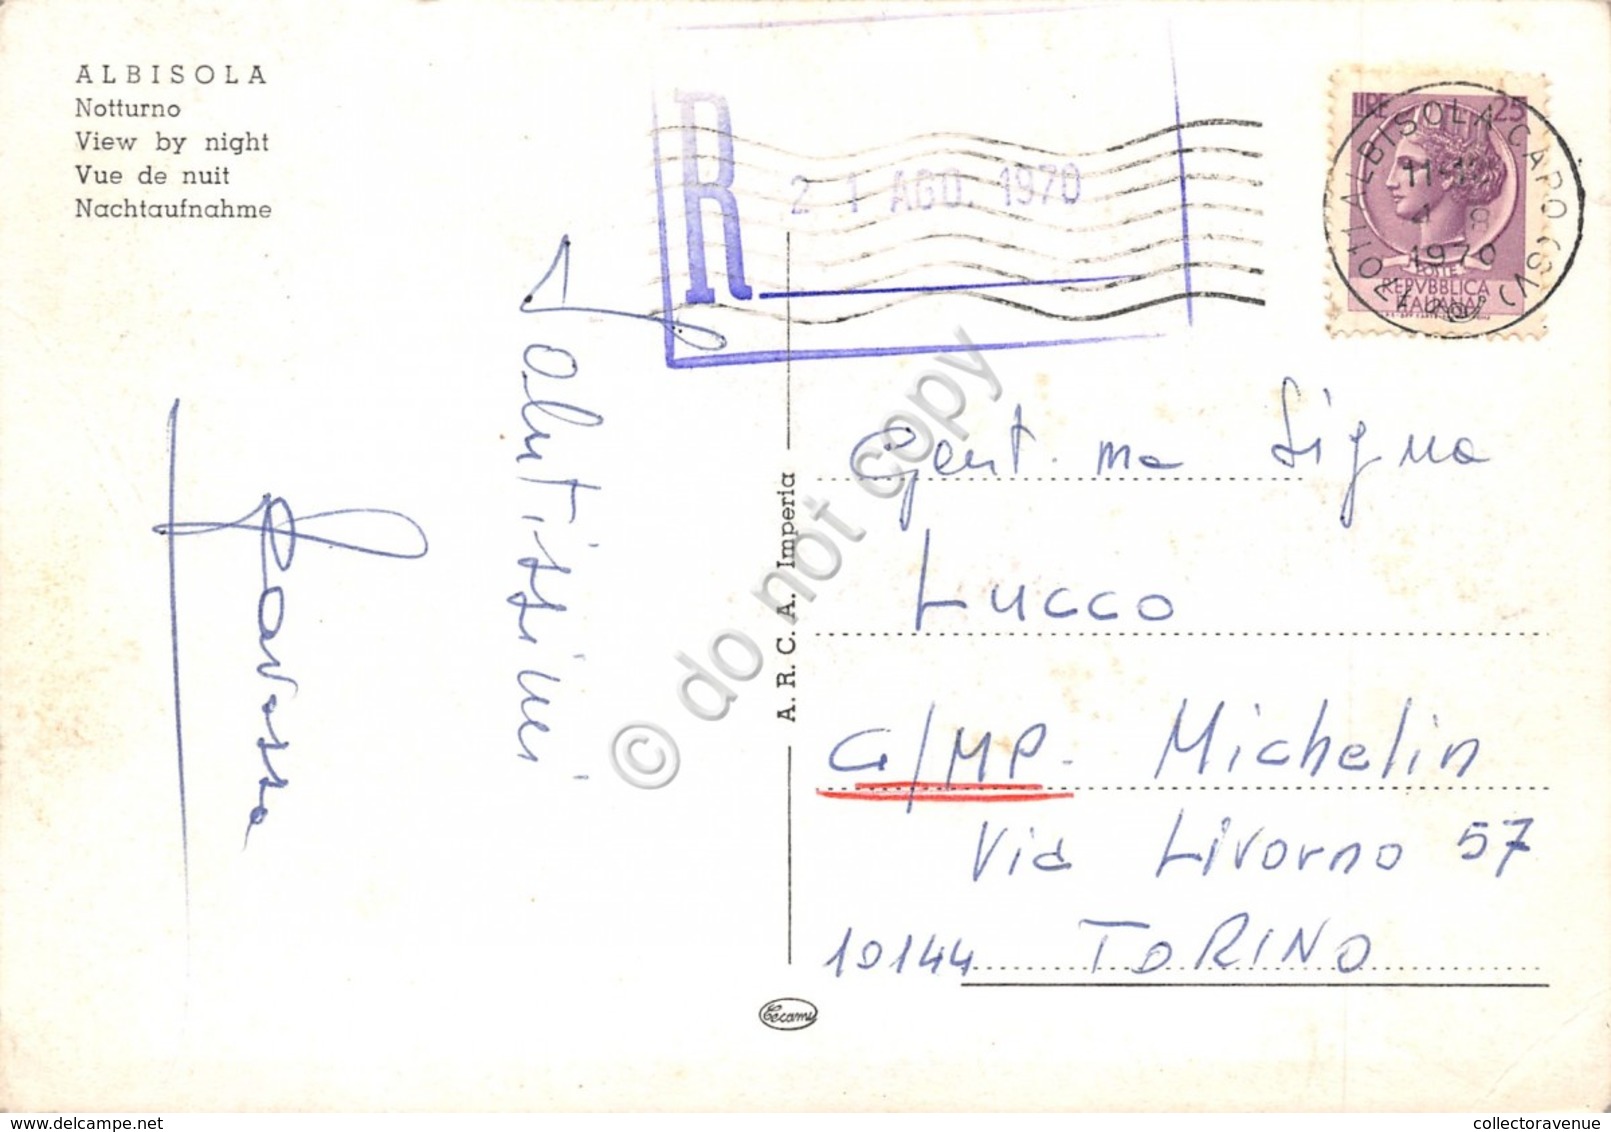 Cartolina Albisola Notturno Timbro A Targhetta R 1970 (Savona) - Savona